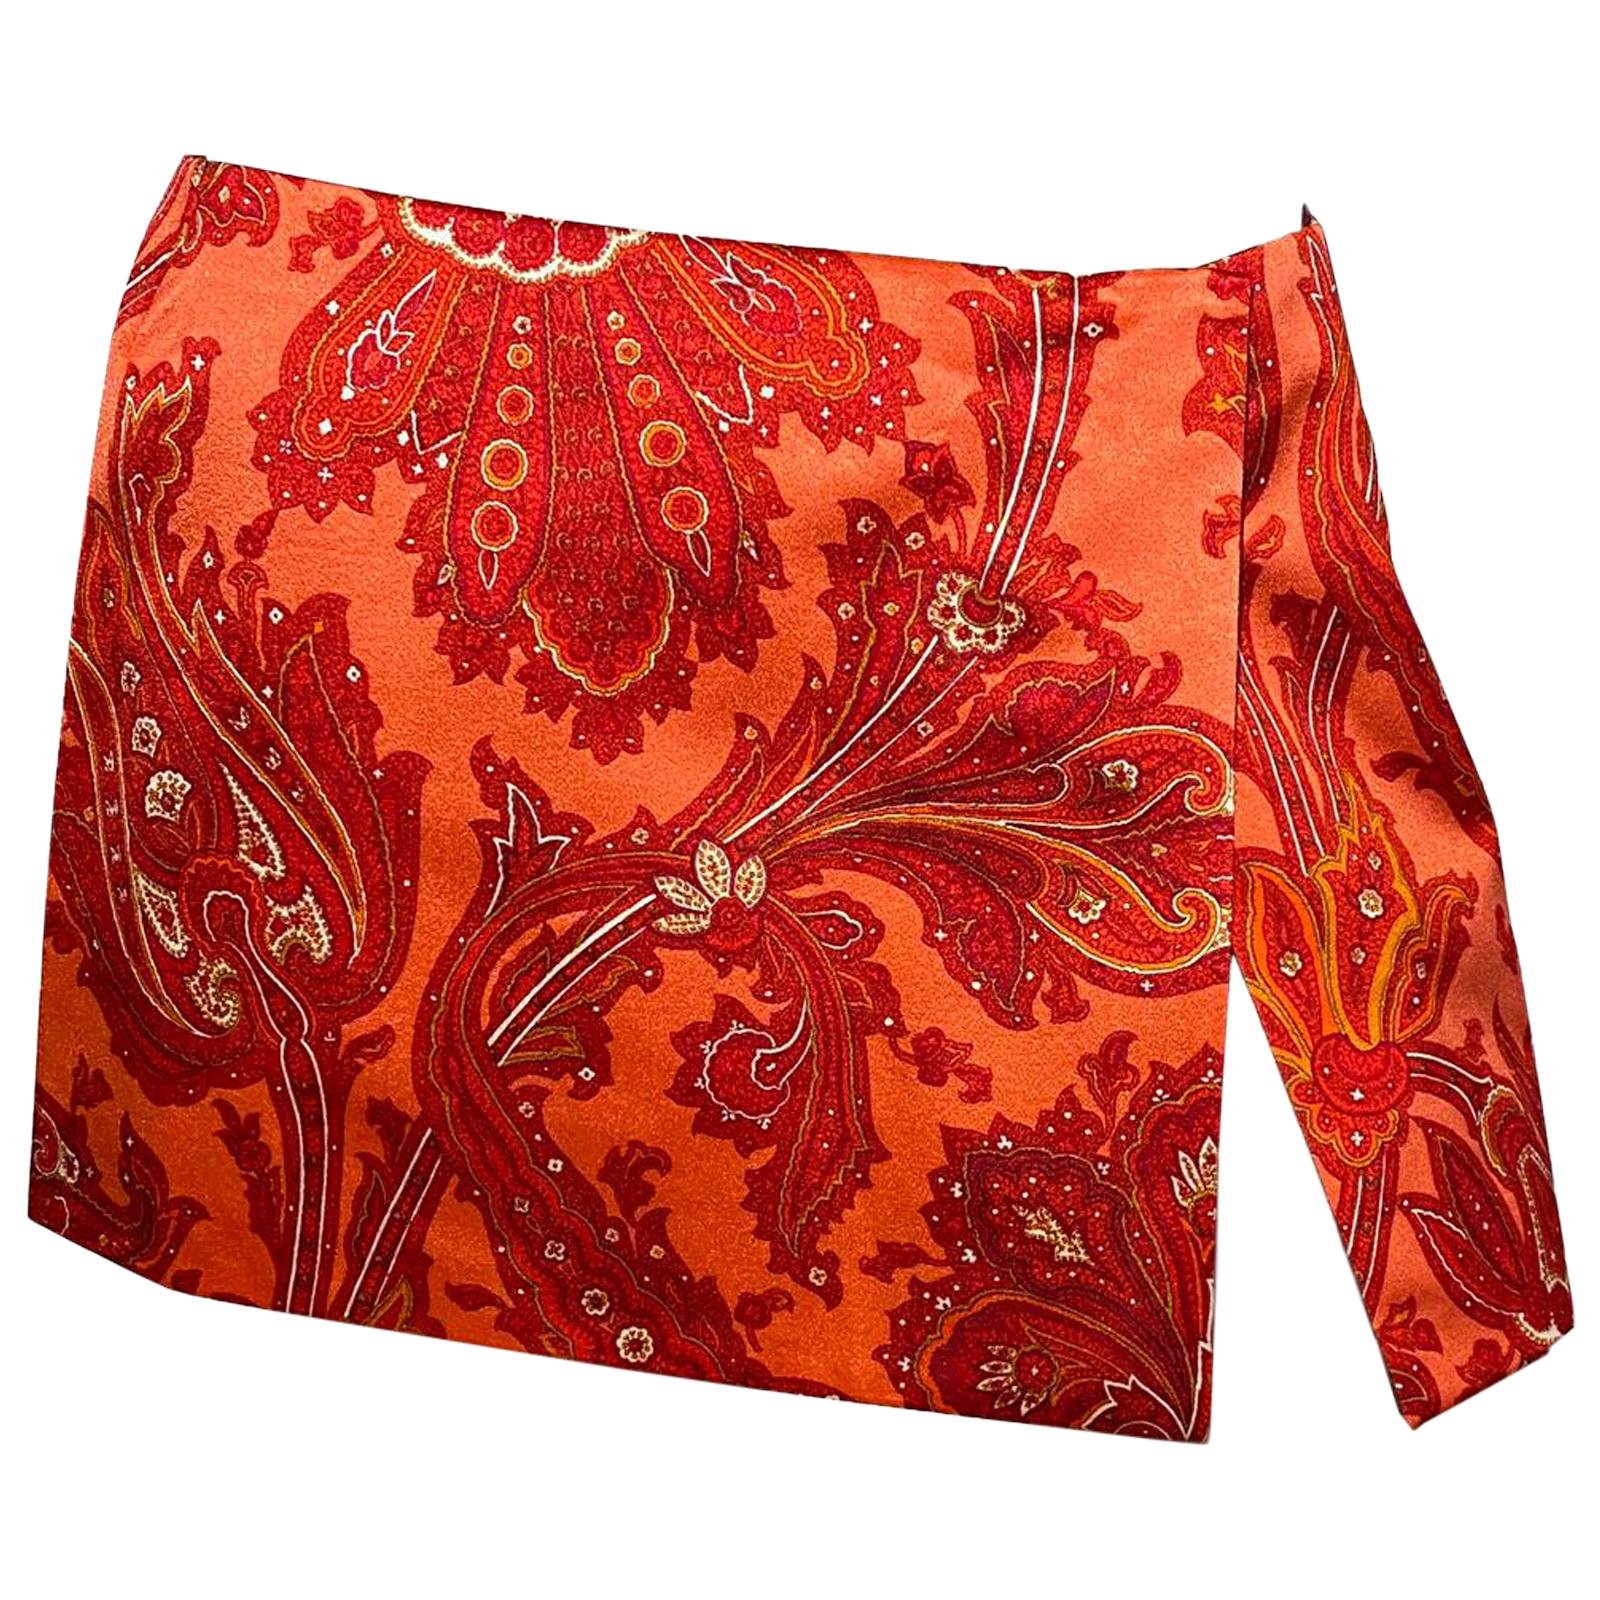 Dolce & Gabbana S/S 2000 “Mix & Match” Mini Skirt